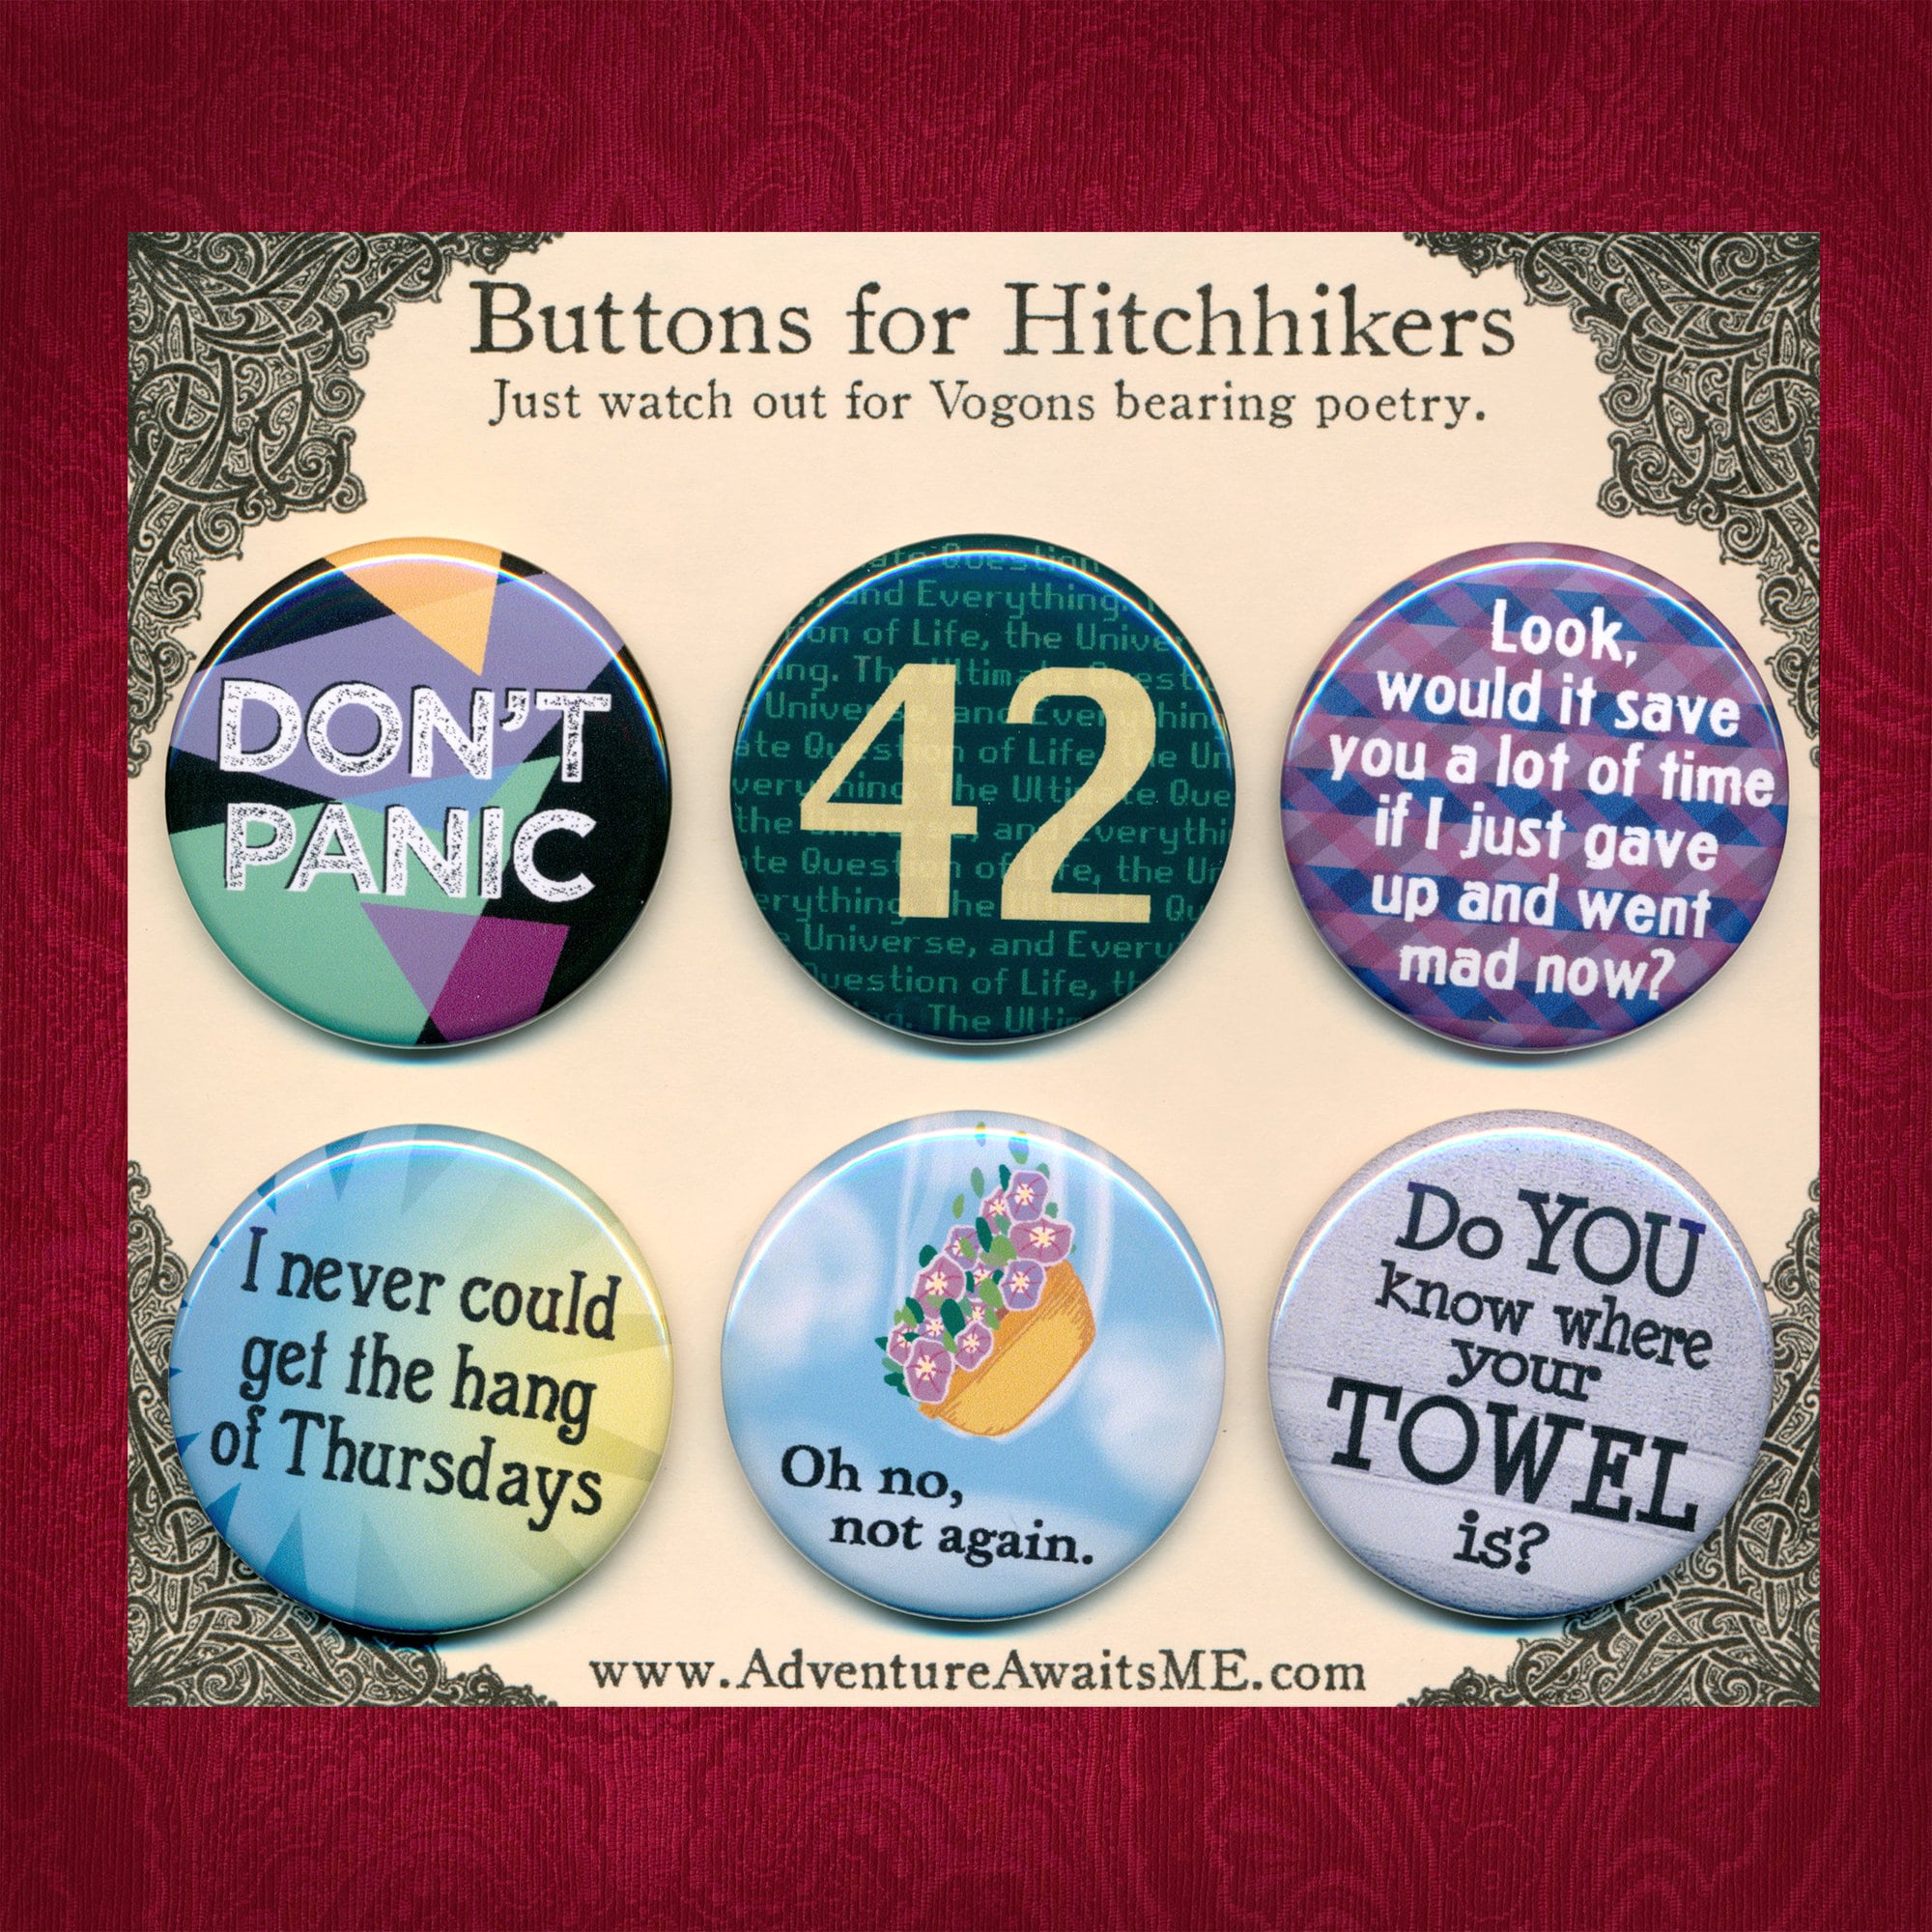 DON'T PANIC 1.25 Magnet Hitchhiker's Guide HHGG Keep Calm Alien Book  Slogan